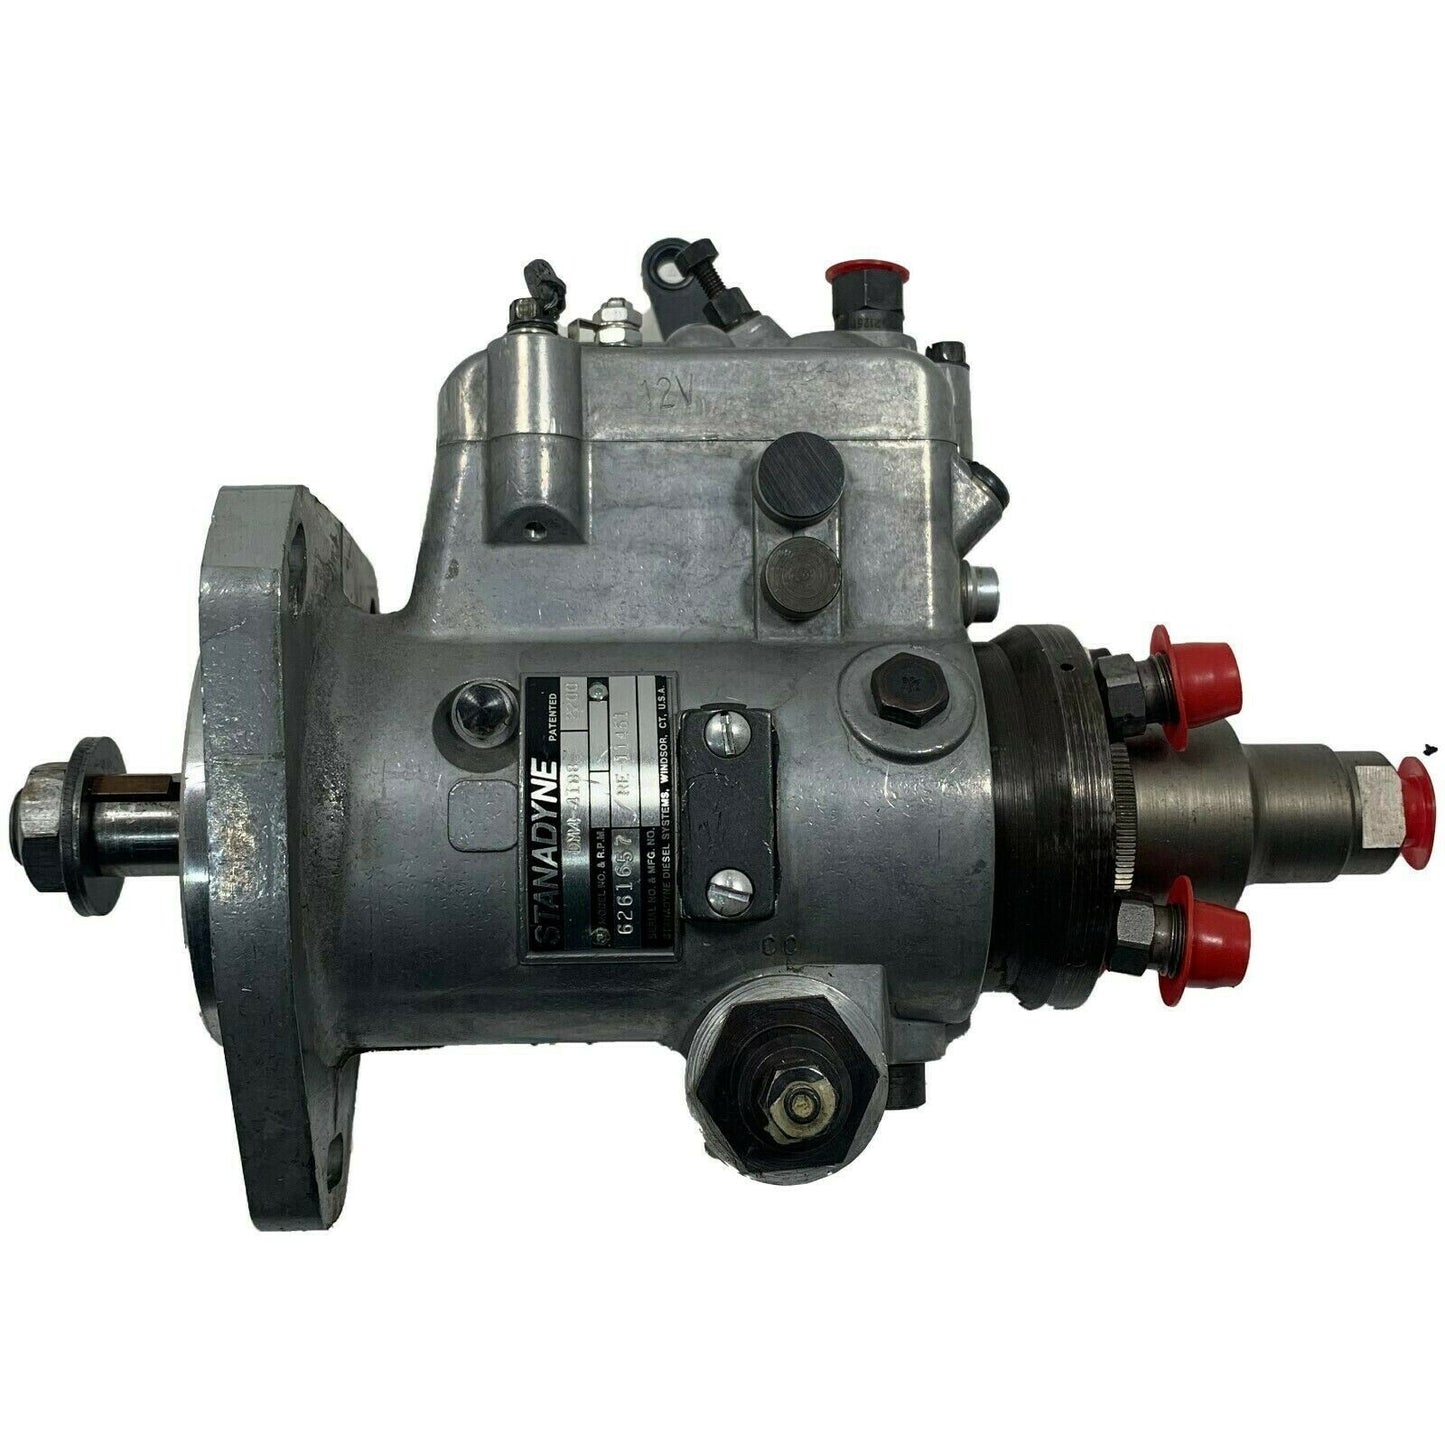 Stanadyne OEM Gasket Seal Kit 24372= to 20019, 2055 for DM model injection pump.